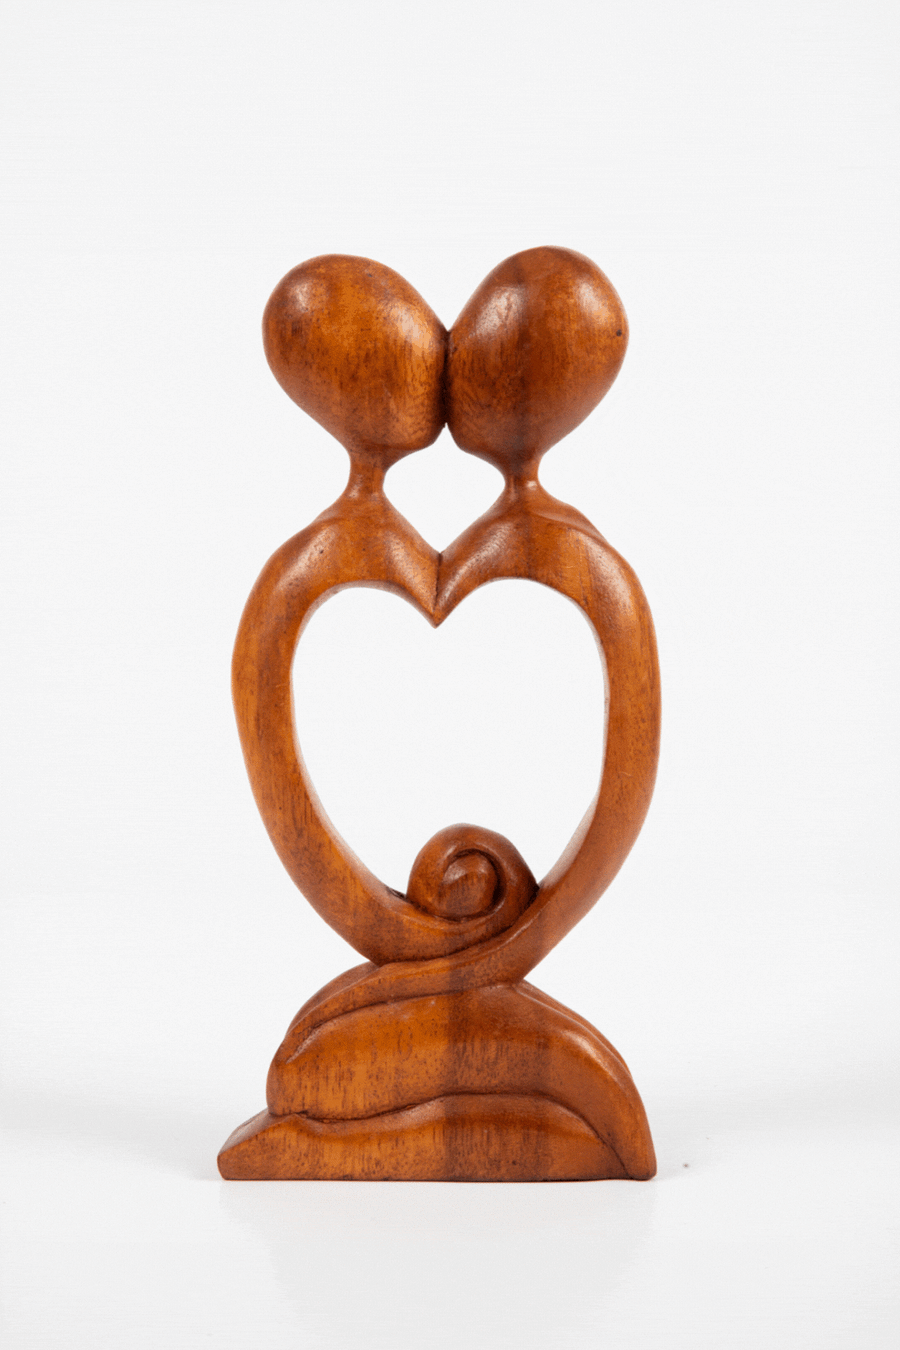 Kissing Carved Wooden Sculpture